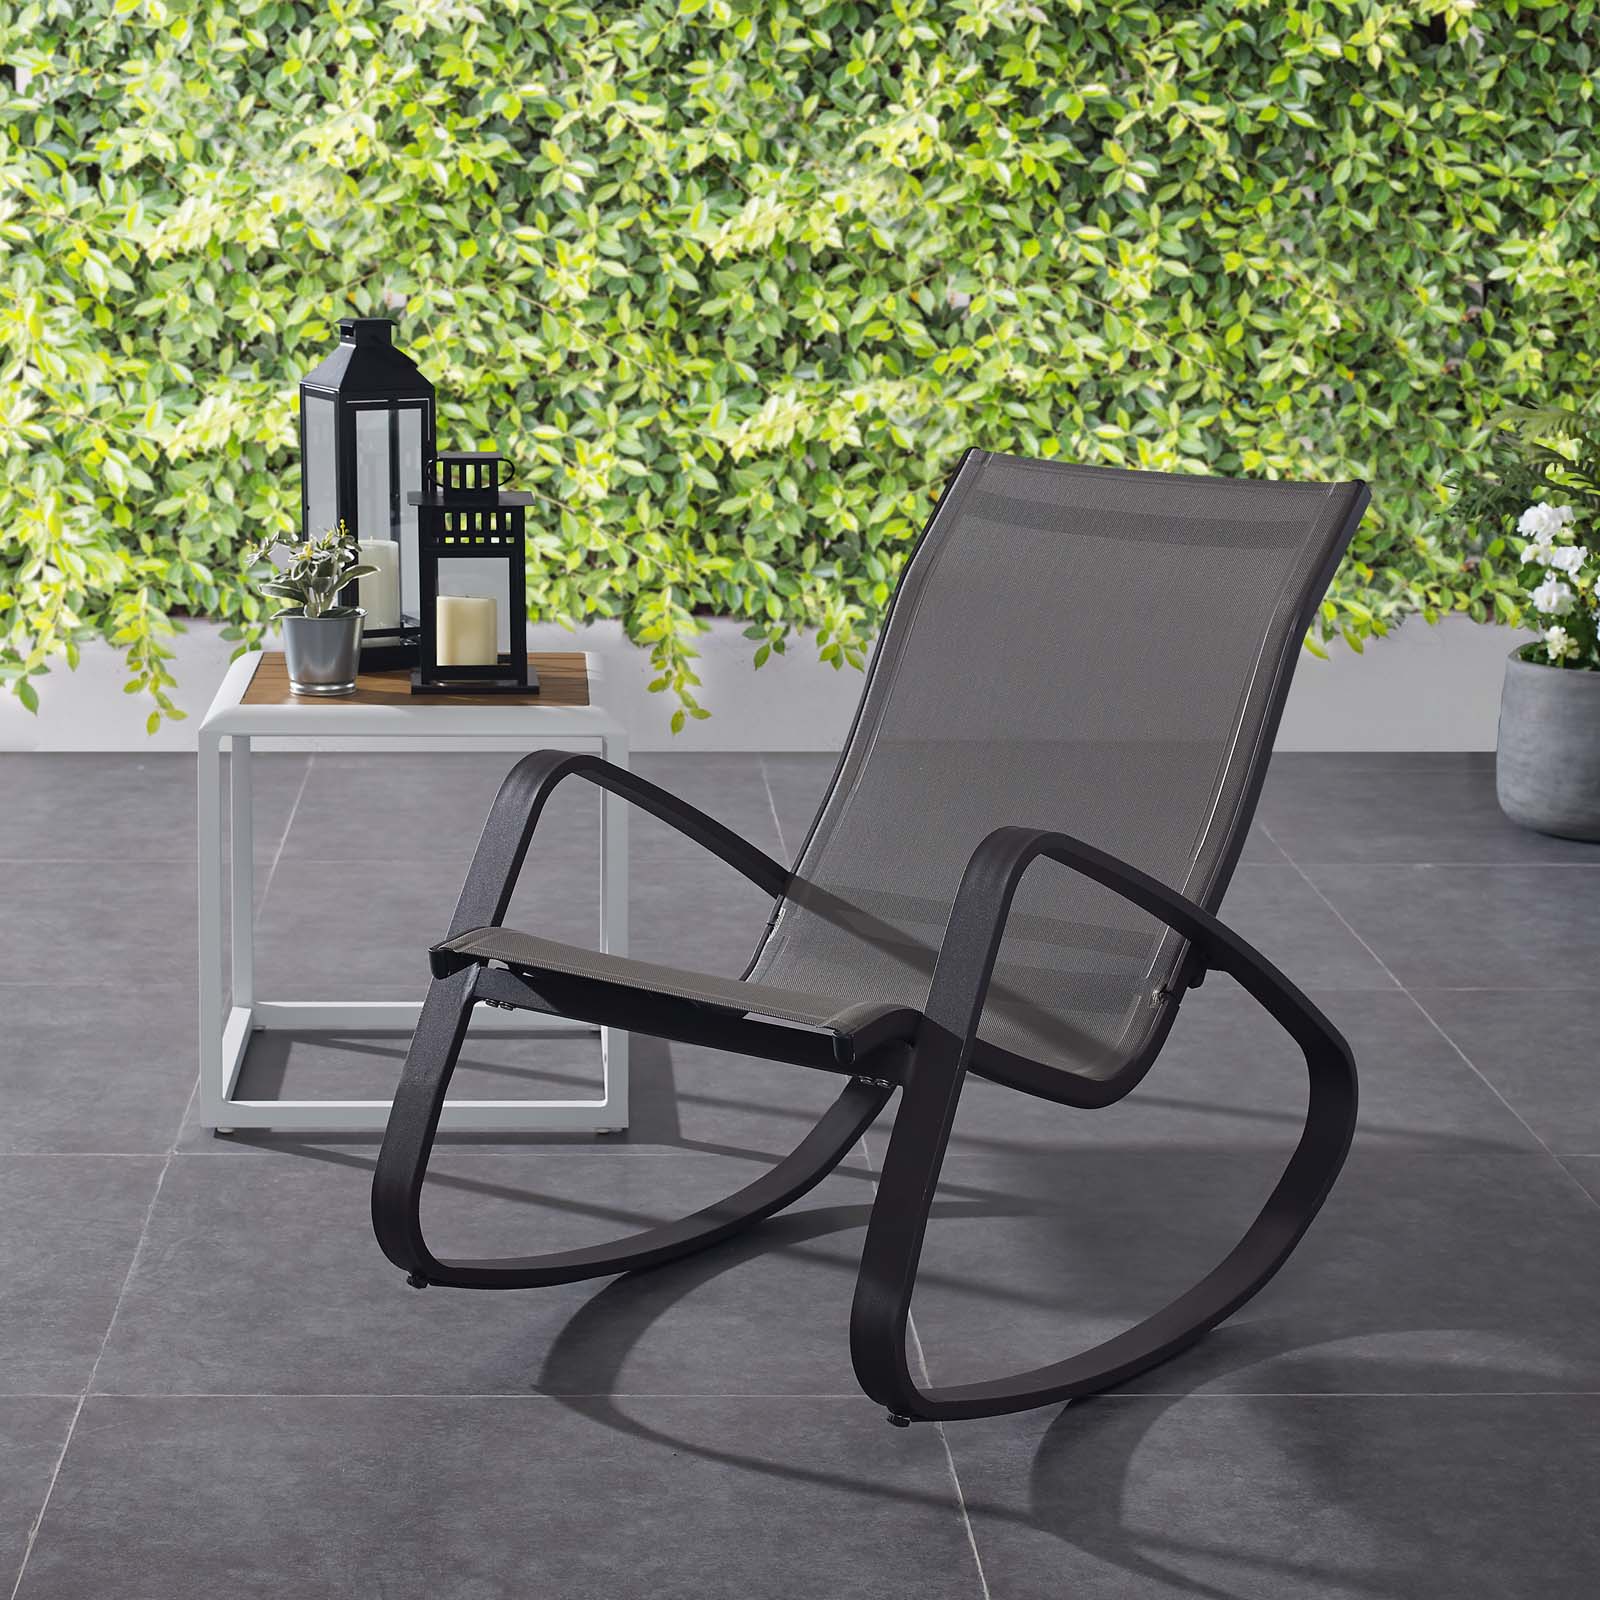 Modern Contemporary Urban Design Outdoor Patio Balcony Garden Furniture Locking Lounge Chair Armchair, Aluminum Metal Steel, Multi Black - image 2 of 6